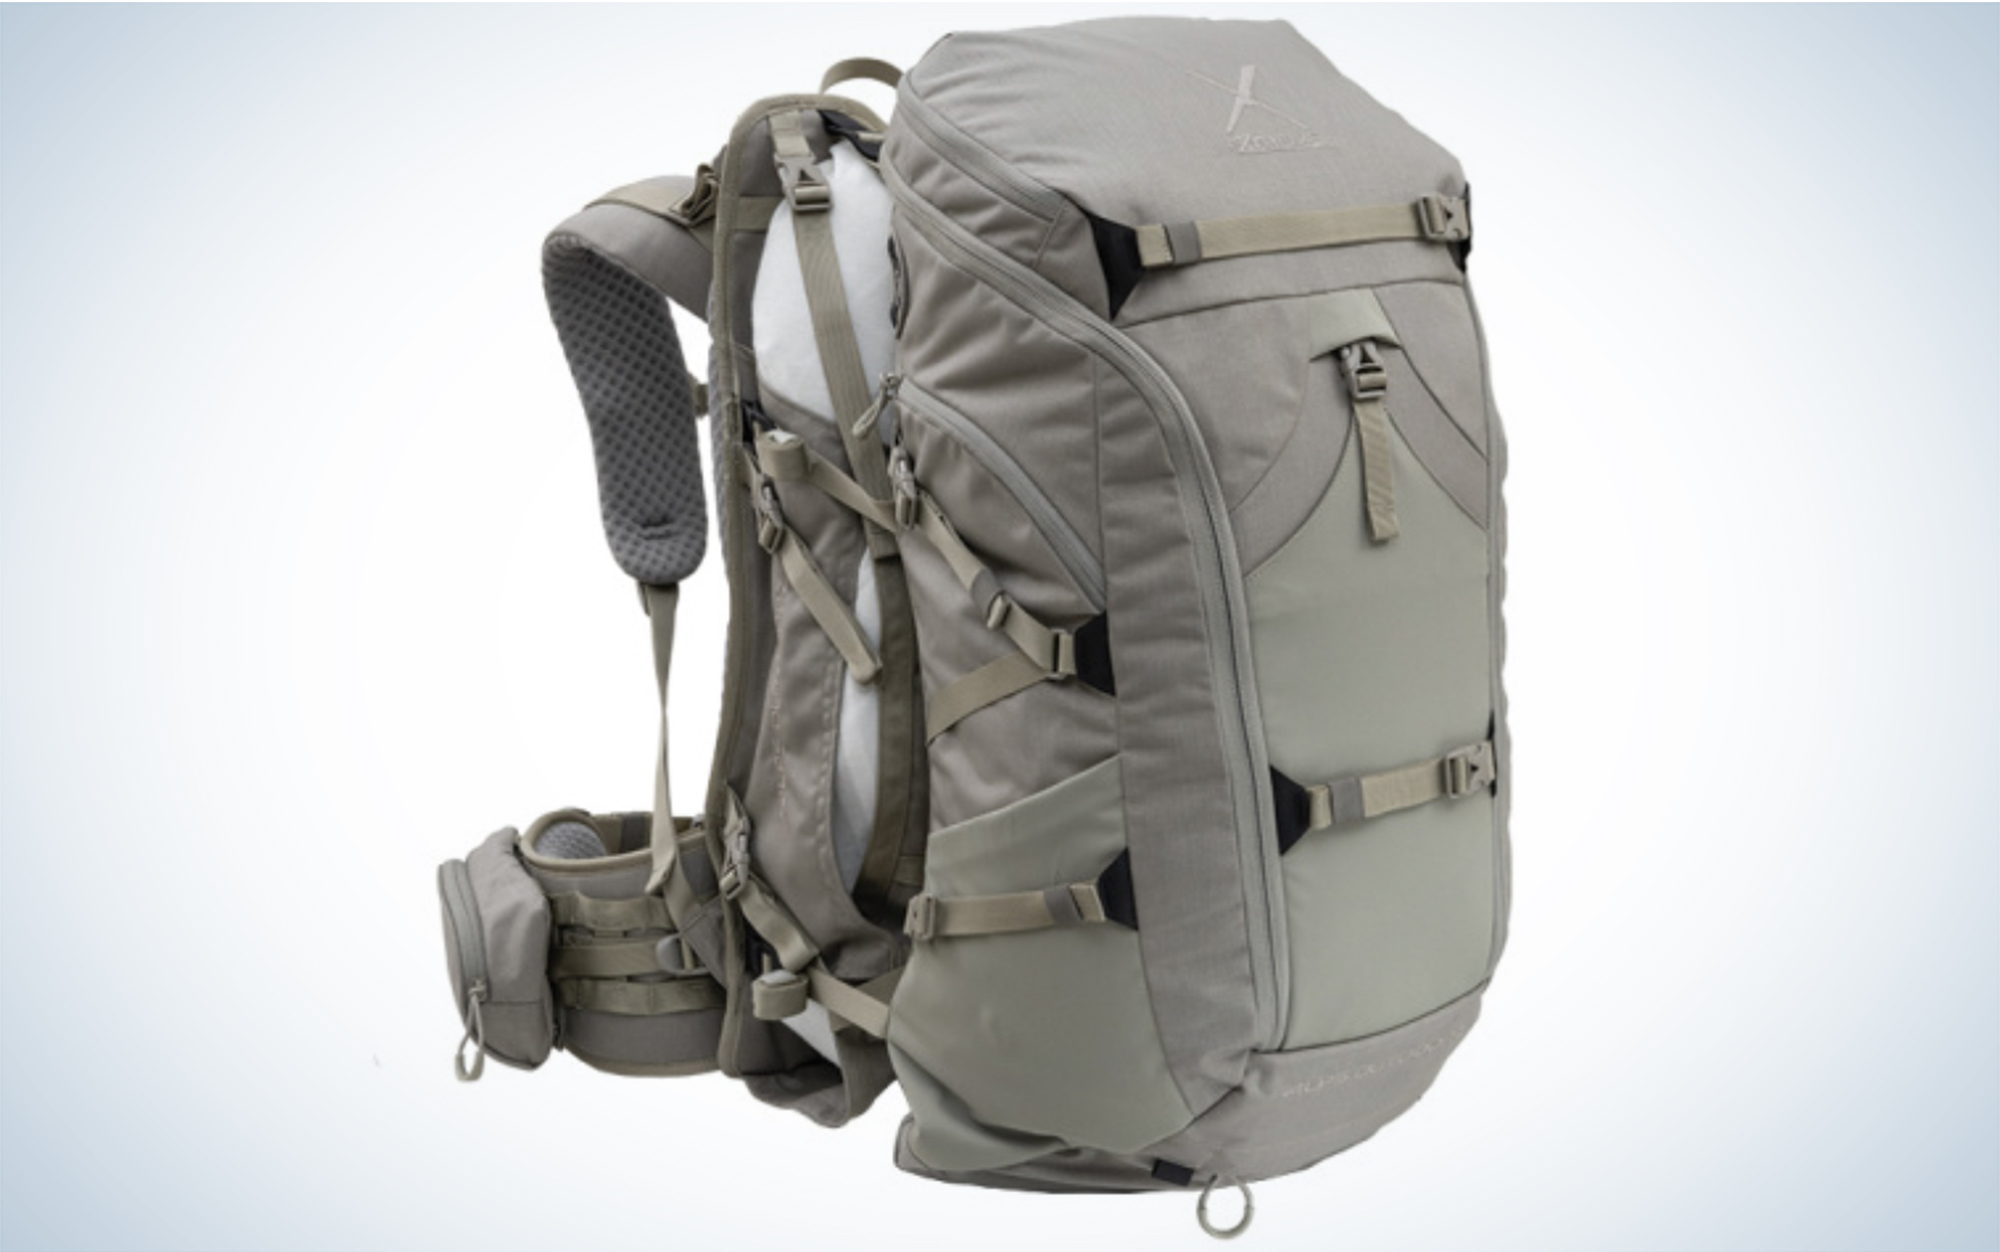 The ALPS Elite Frame + 3800 PackÂ is the best elk hunting backpack.